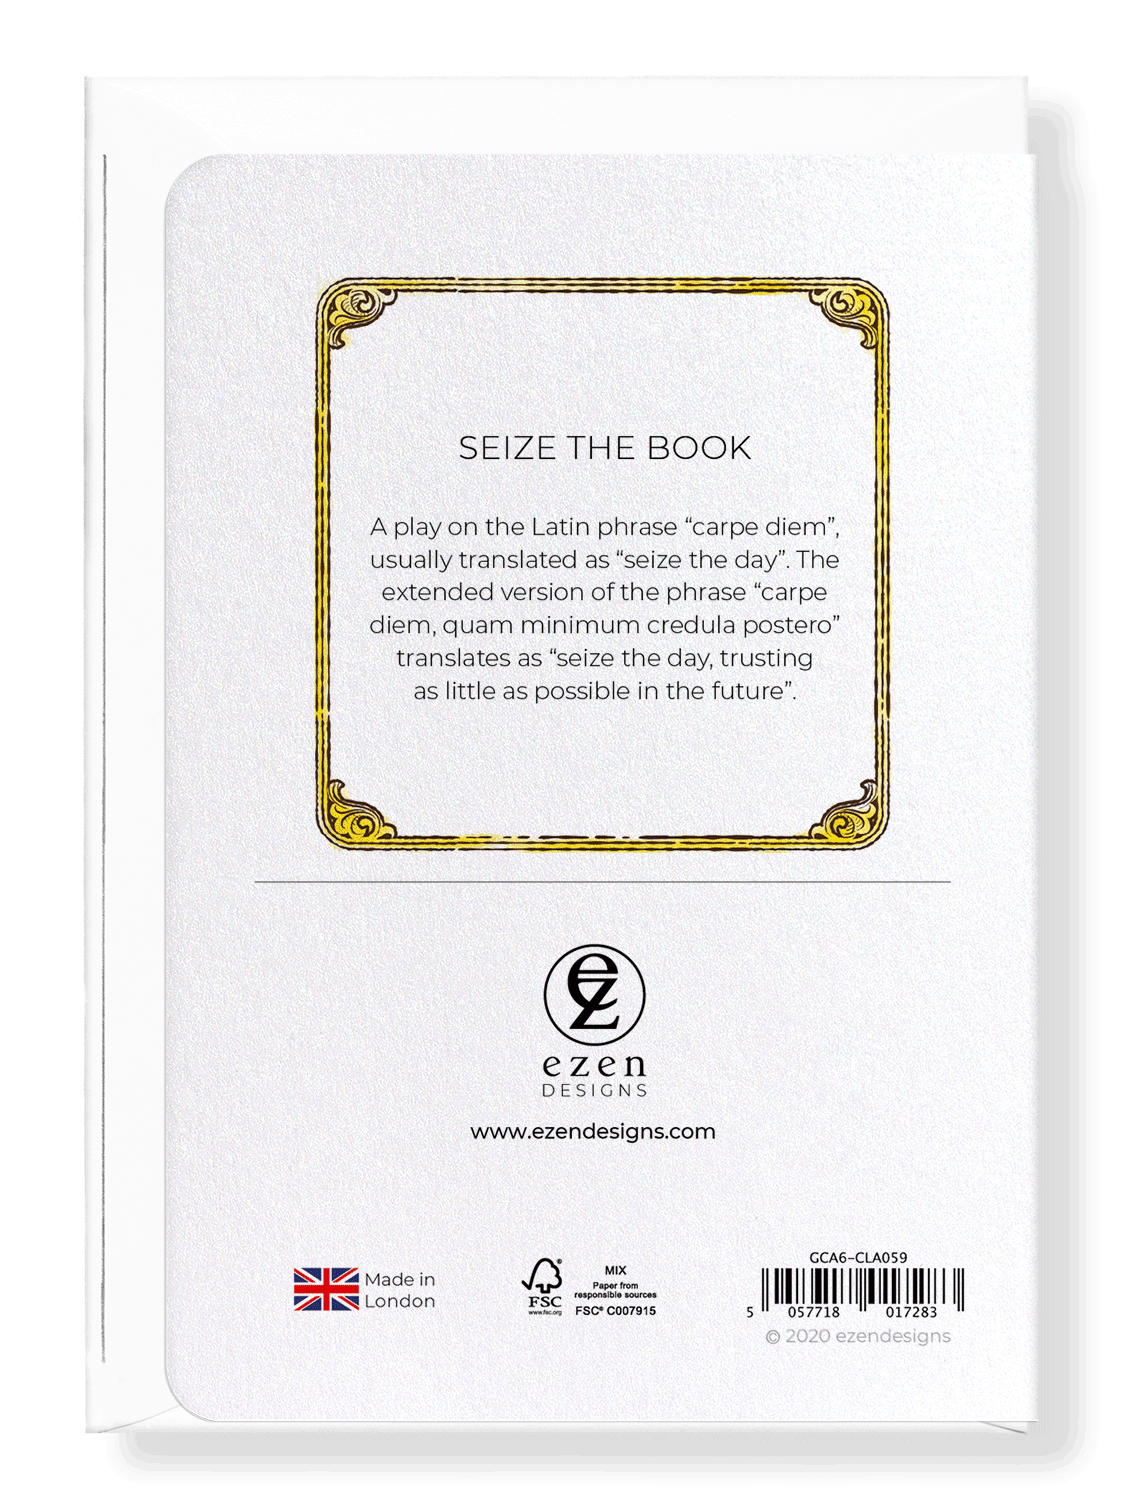 Ezen Designs - Seize the book - Greeting Card - Back